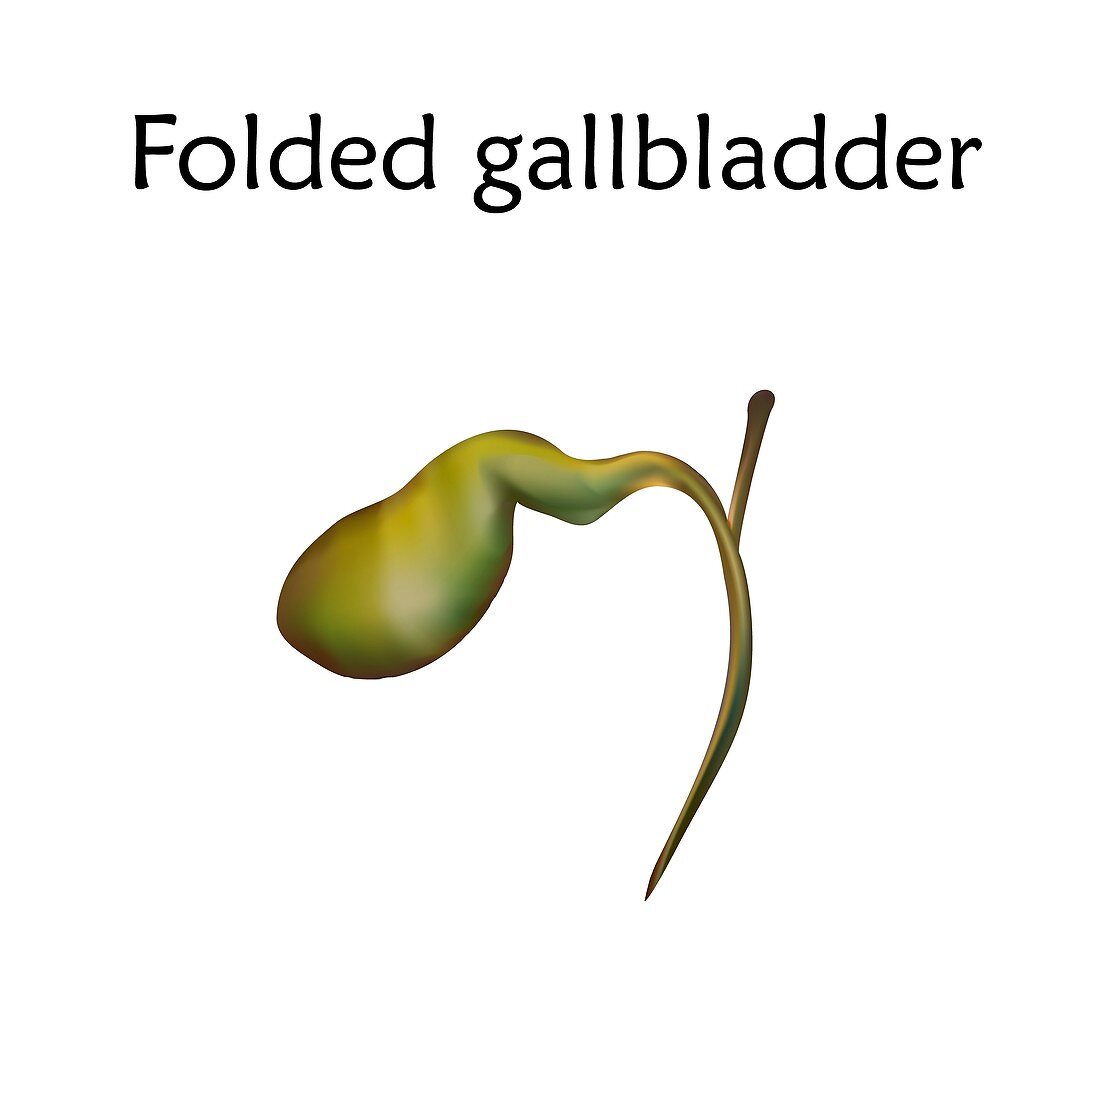 Folded gallbladder, illustration